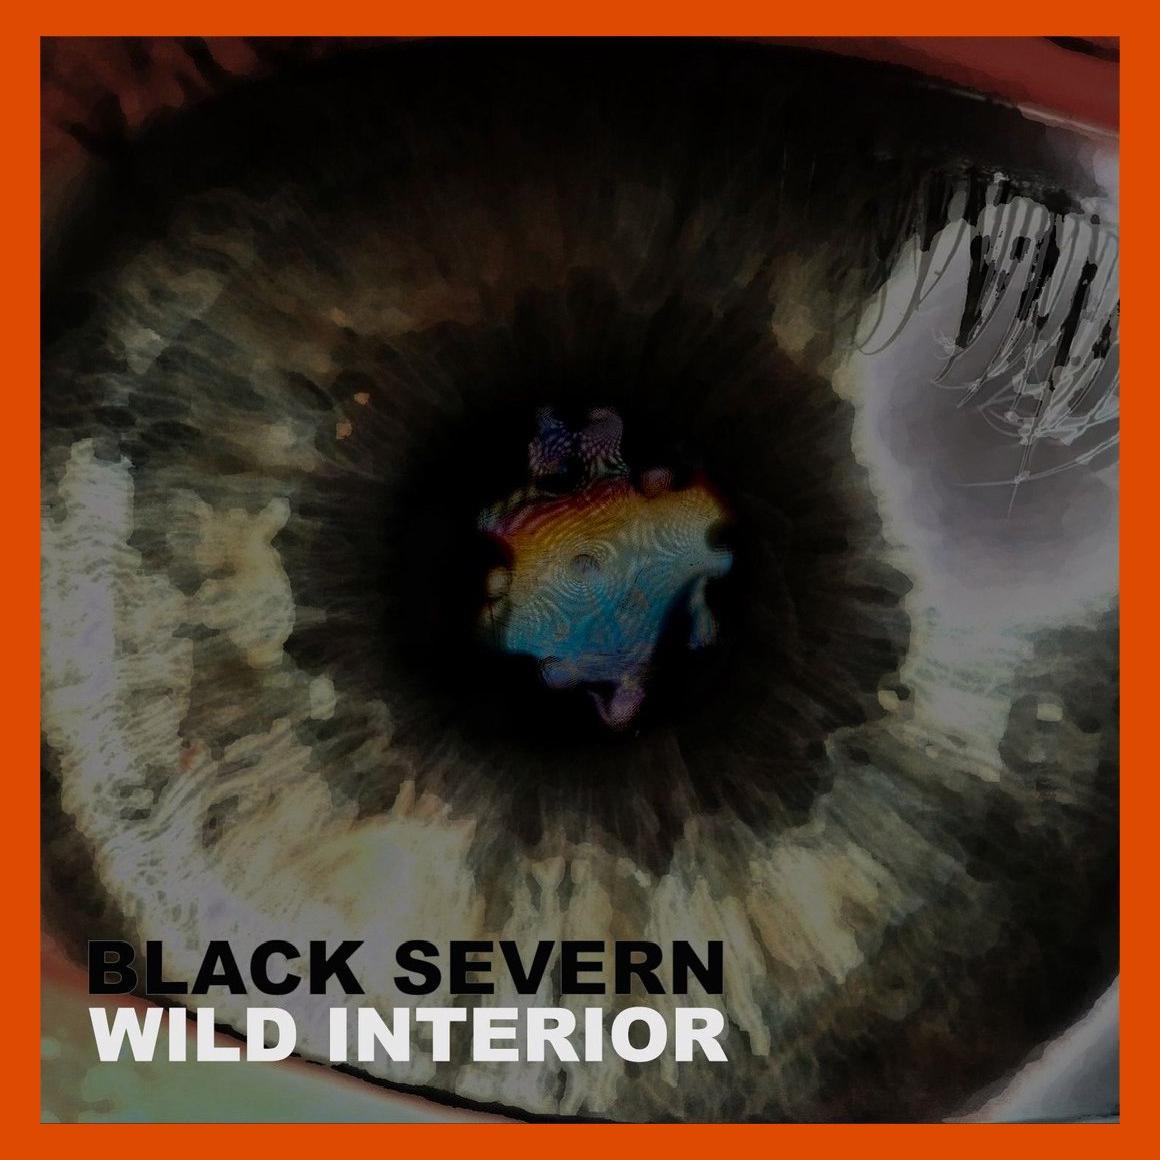 Black Severn - Wild Interior (2017)